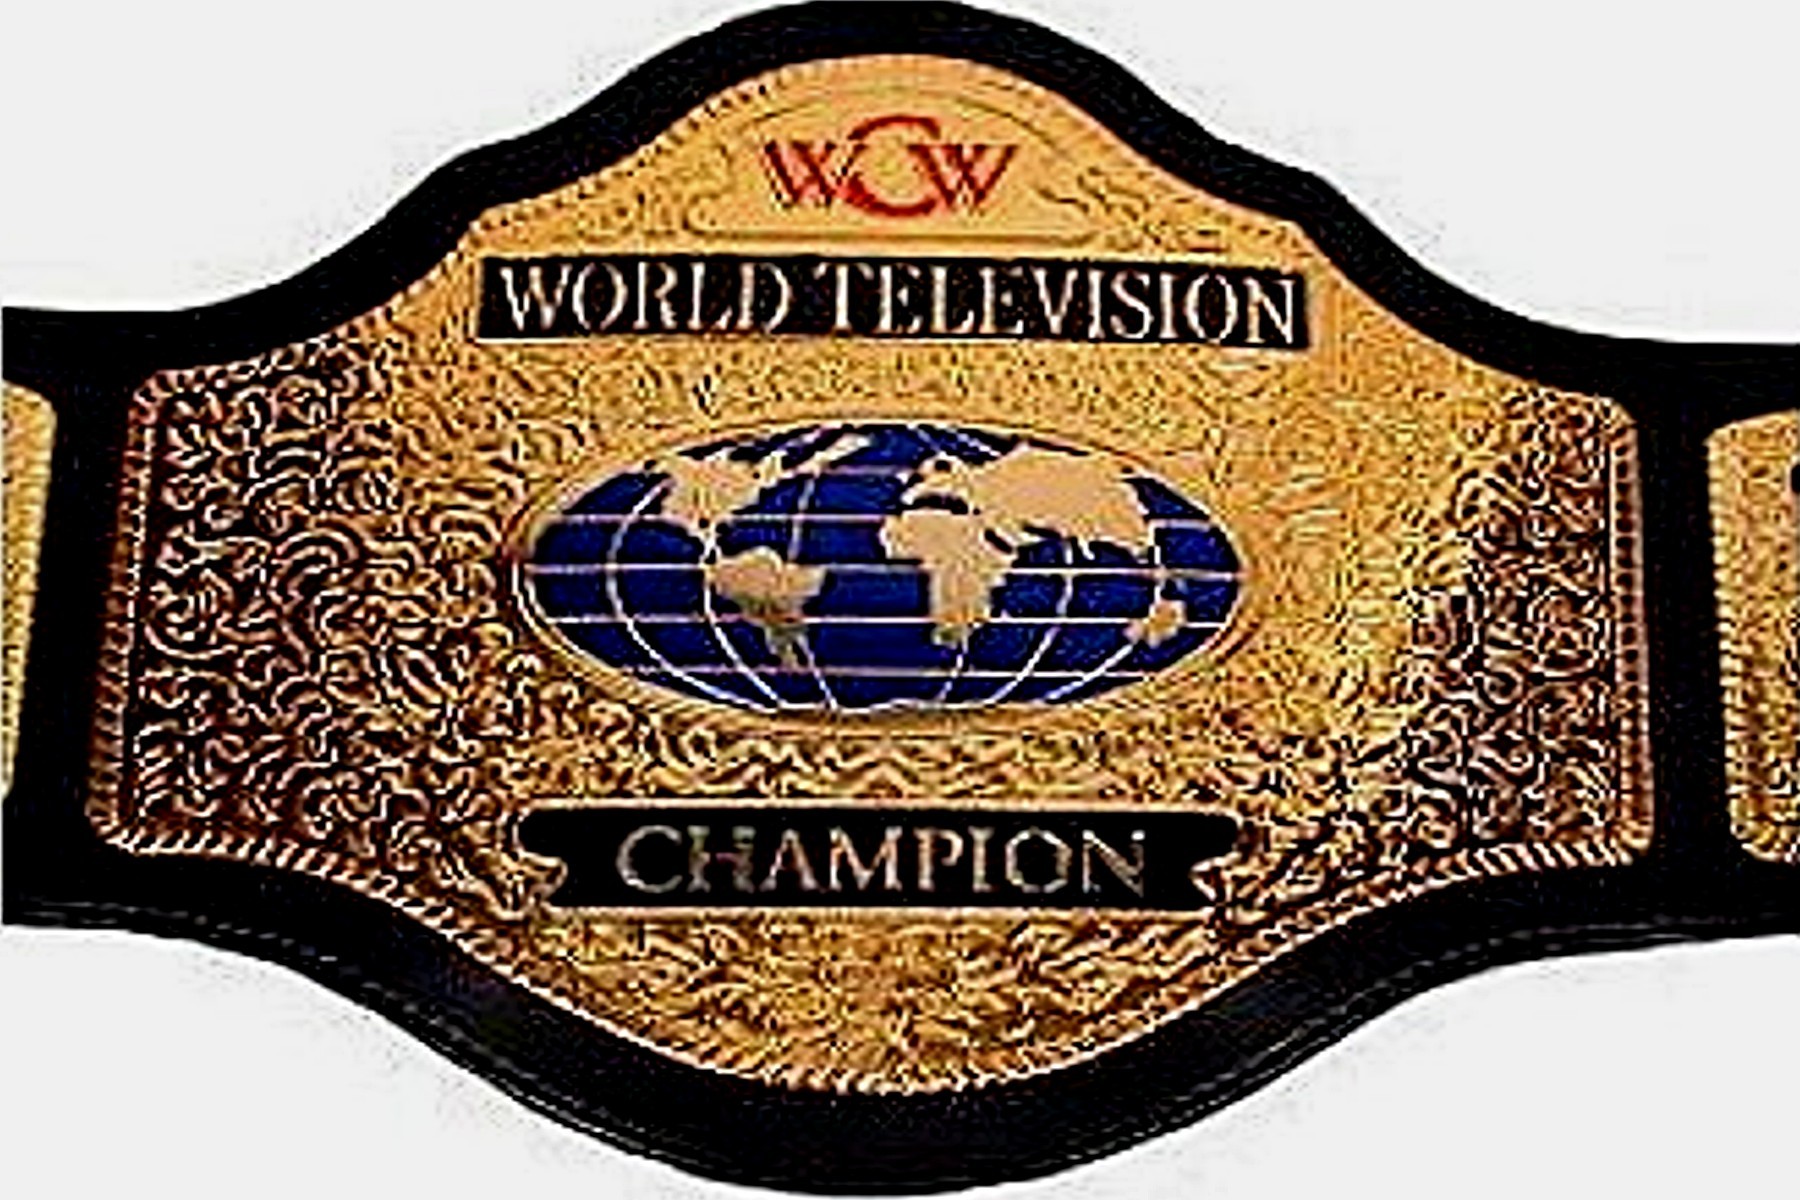 wcw television championship